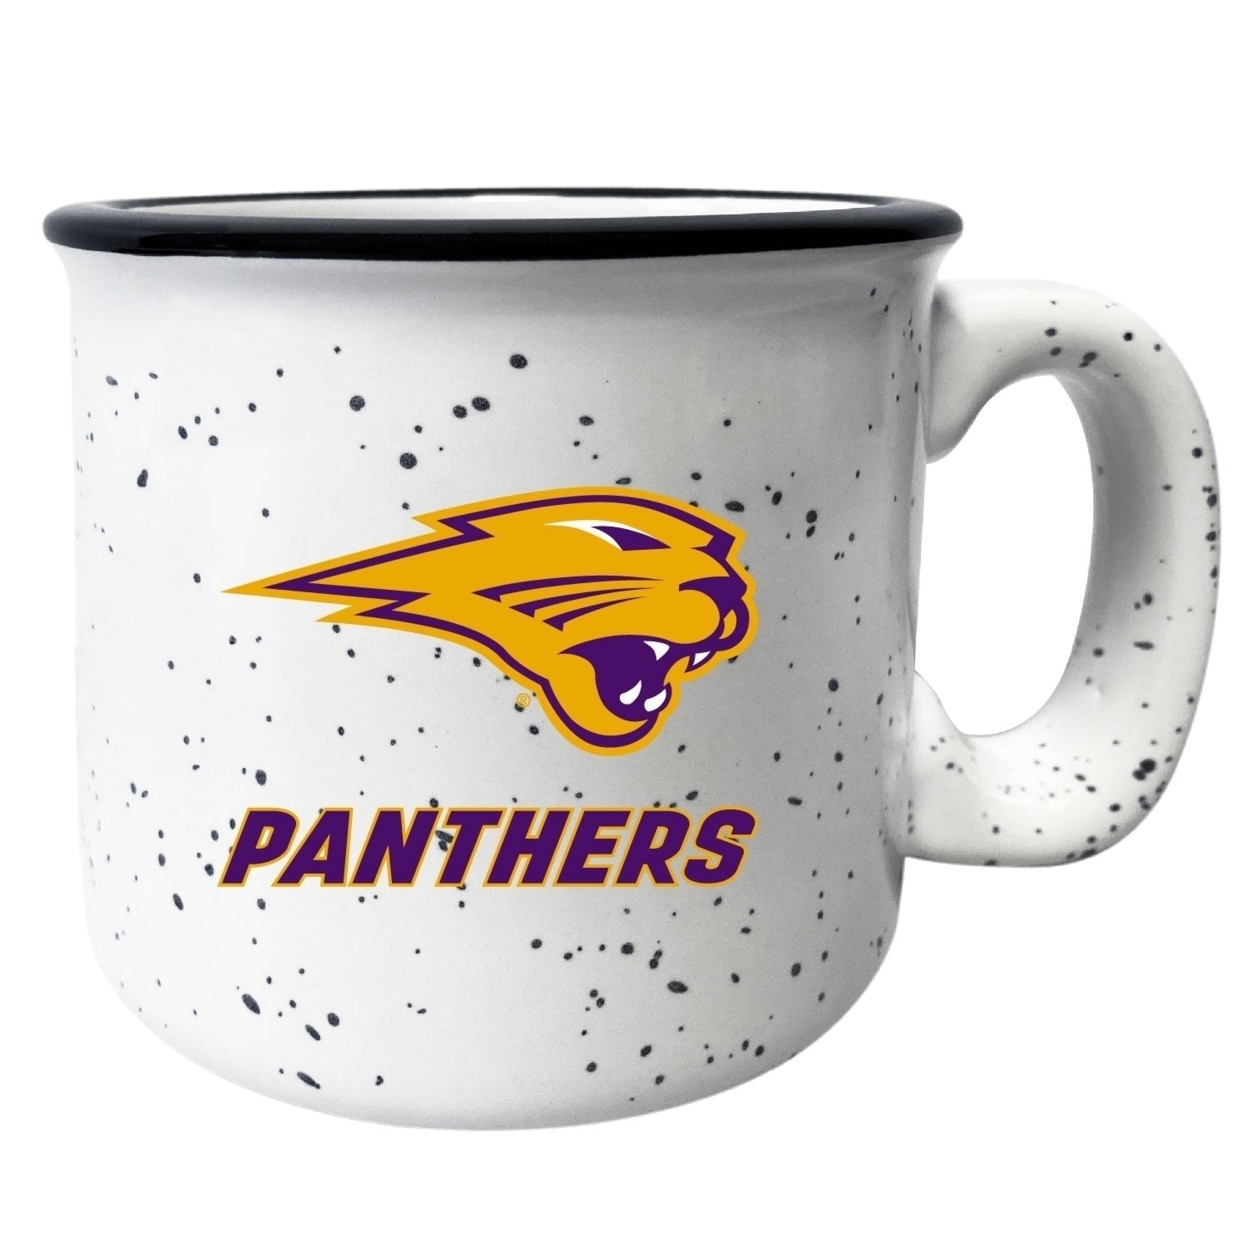 Northern Iowa Panthers 8 Oz Speckled Ceramic Camper Coffee Mug White (White).